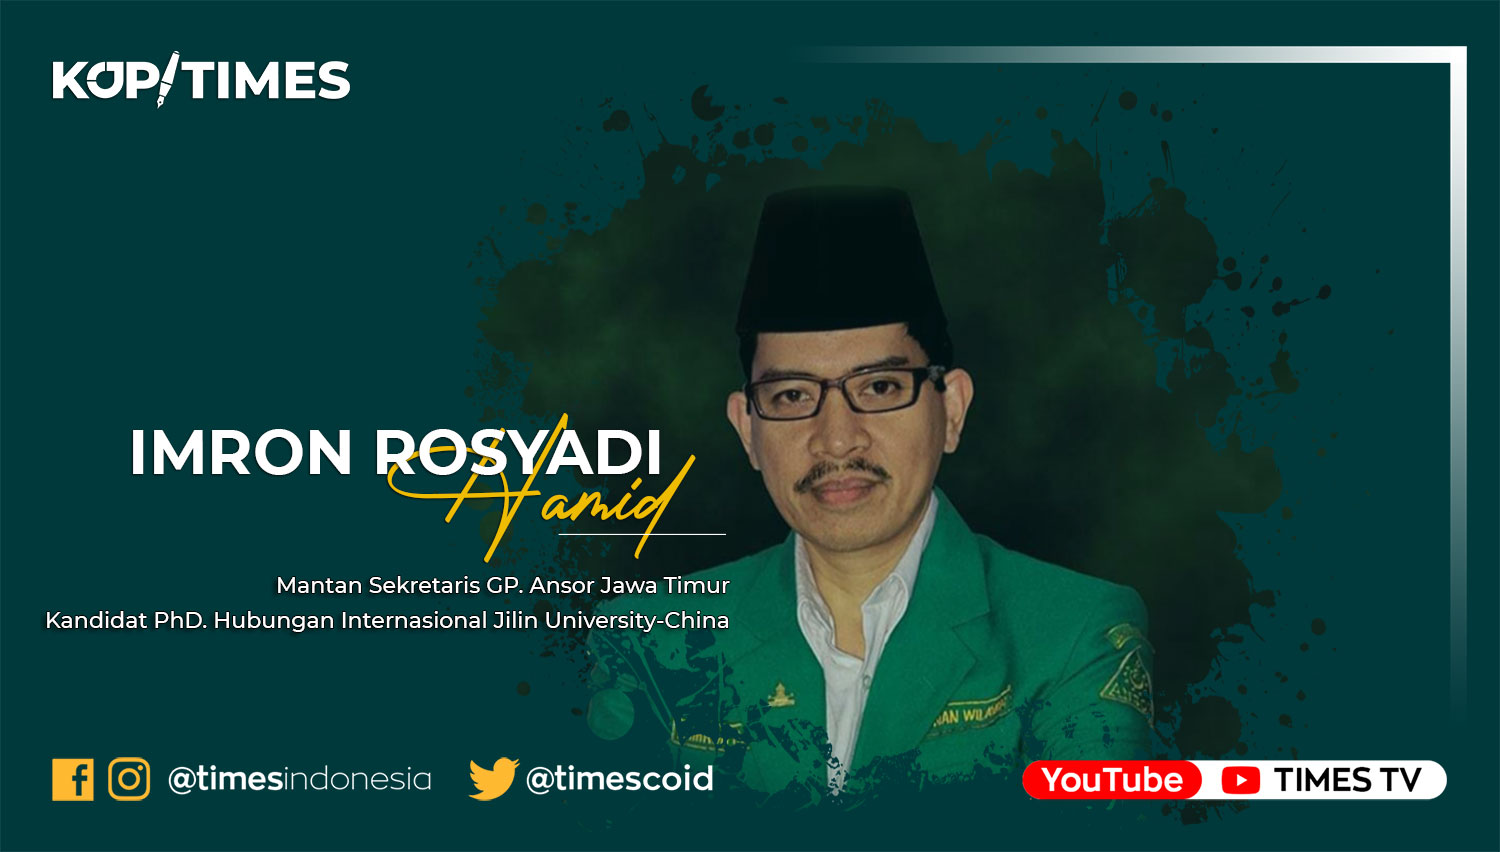 Imron Rosyadi Hamid. Mantan Sekretaris GP. Ansor Jawa Timur. Kandidat PhD. Hubungan Internasional Jilin University-China.